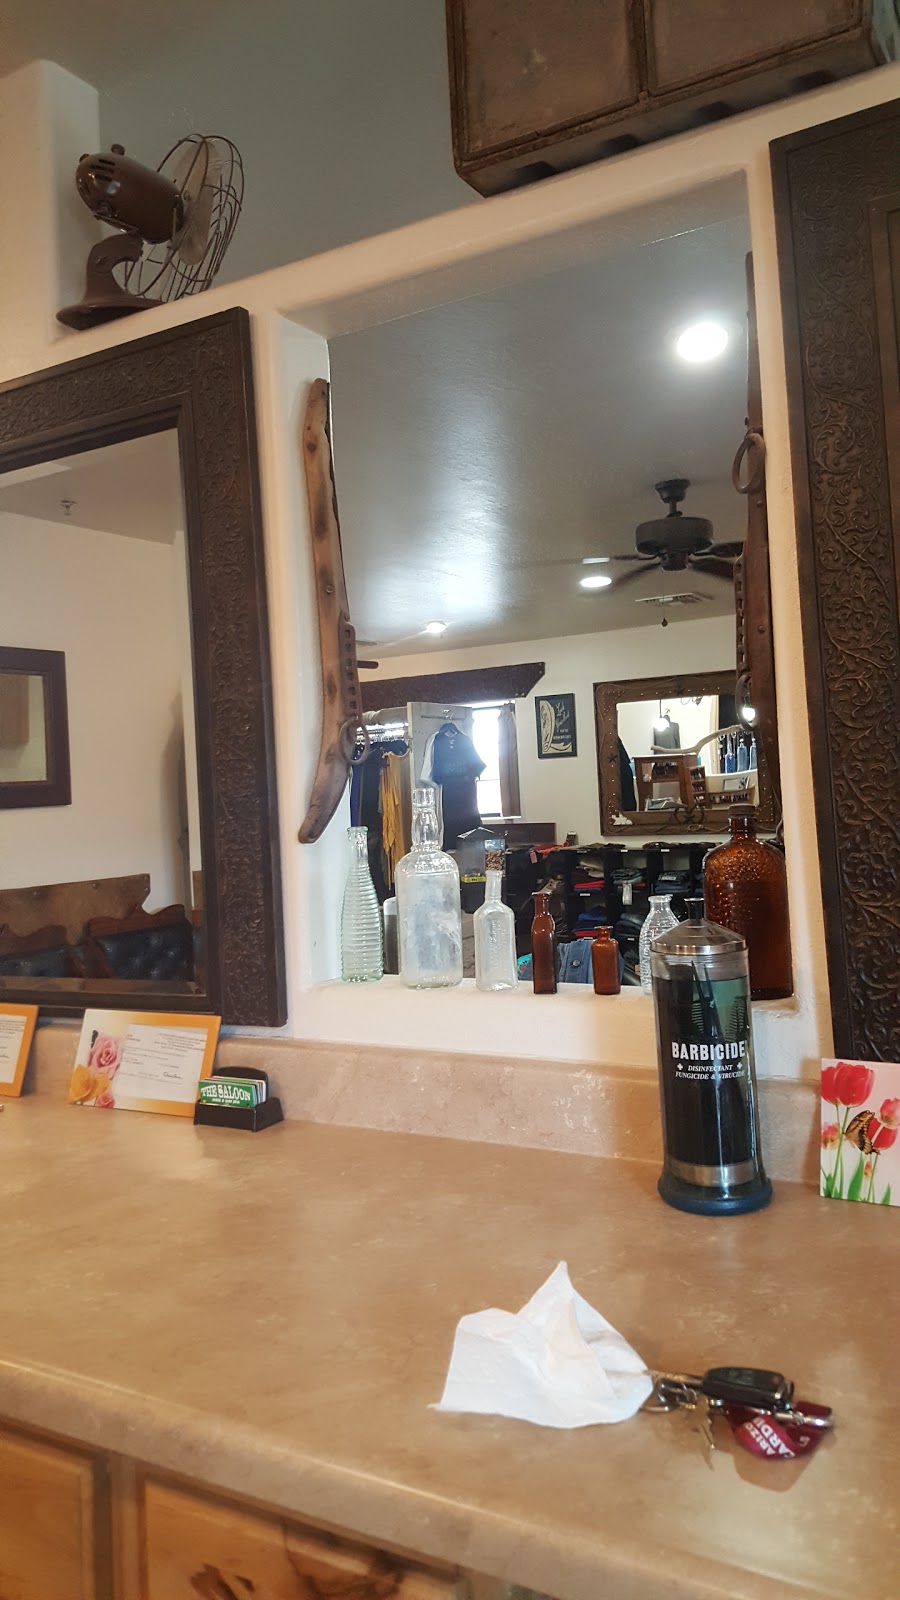 The Saloon Hair and Day Spa | Photo 1 of 10 | Address: 325 N Miller Rd, Buckeye, AZ 85326, USA | Phone: (623) 386-8132